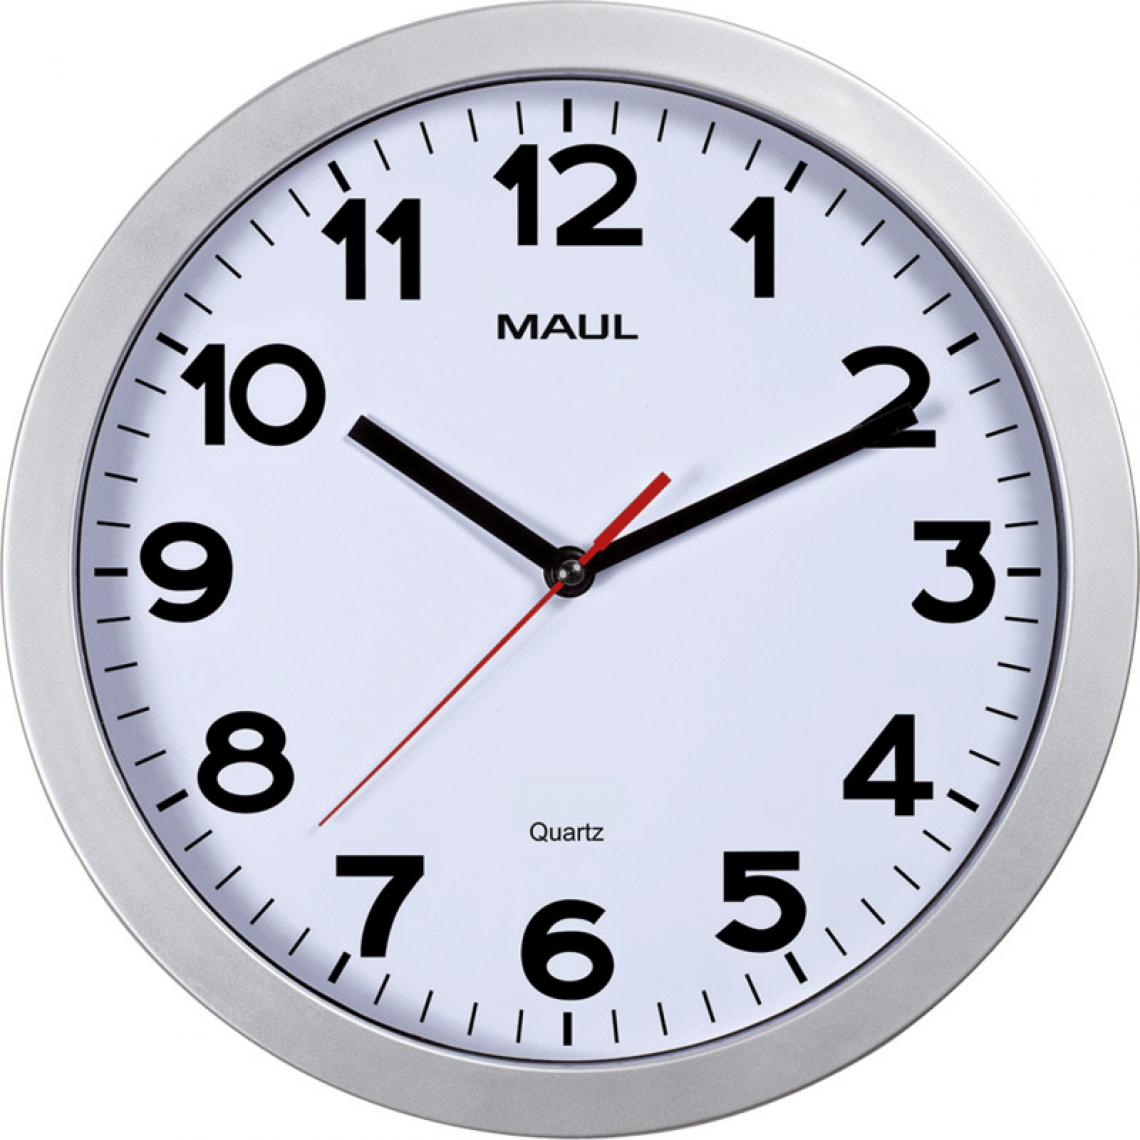 Maul - MAUL Horloge murale/horloge quartz MAULstep, diamètre: 300mm () - Télérupteurs, minuteries et horloges